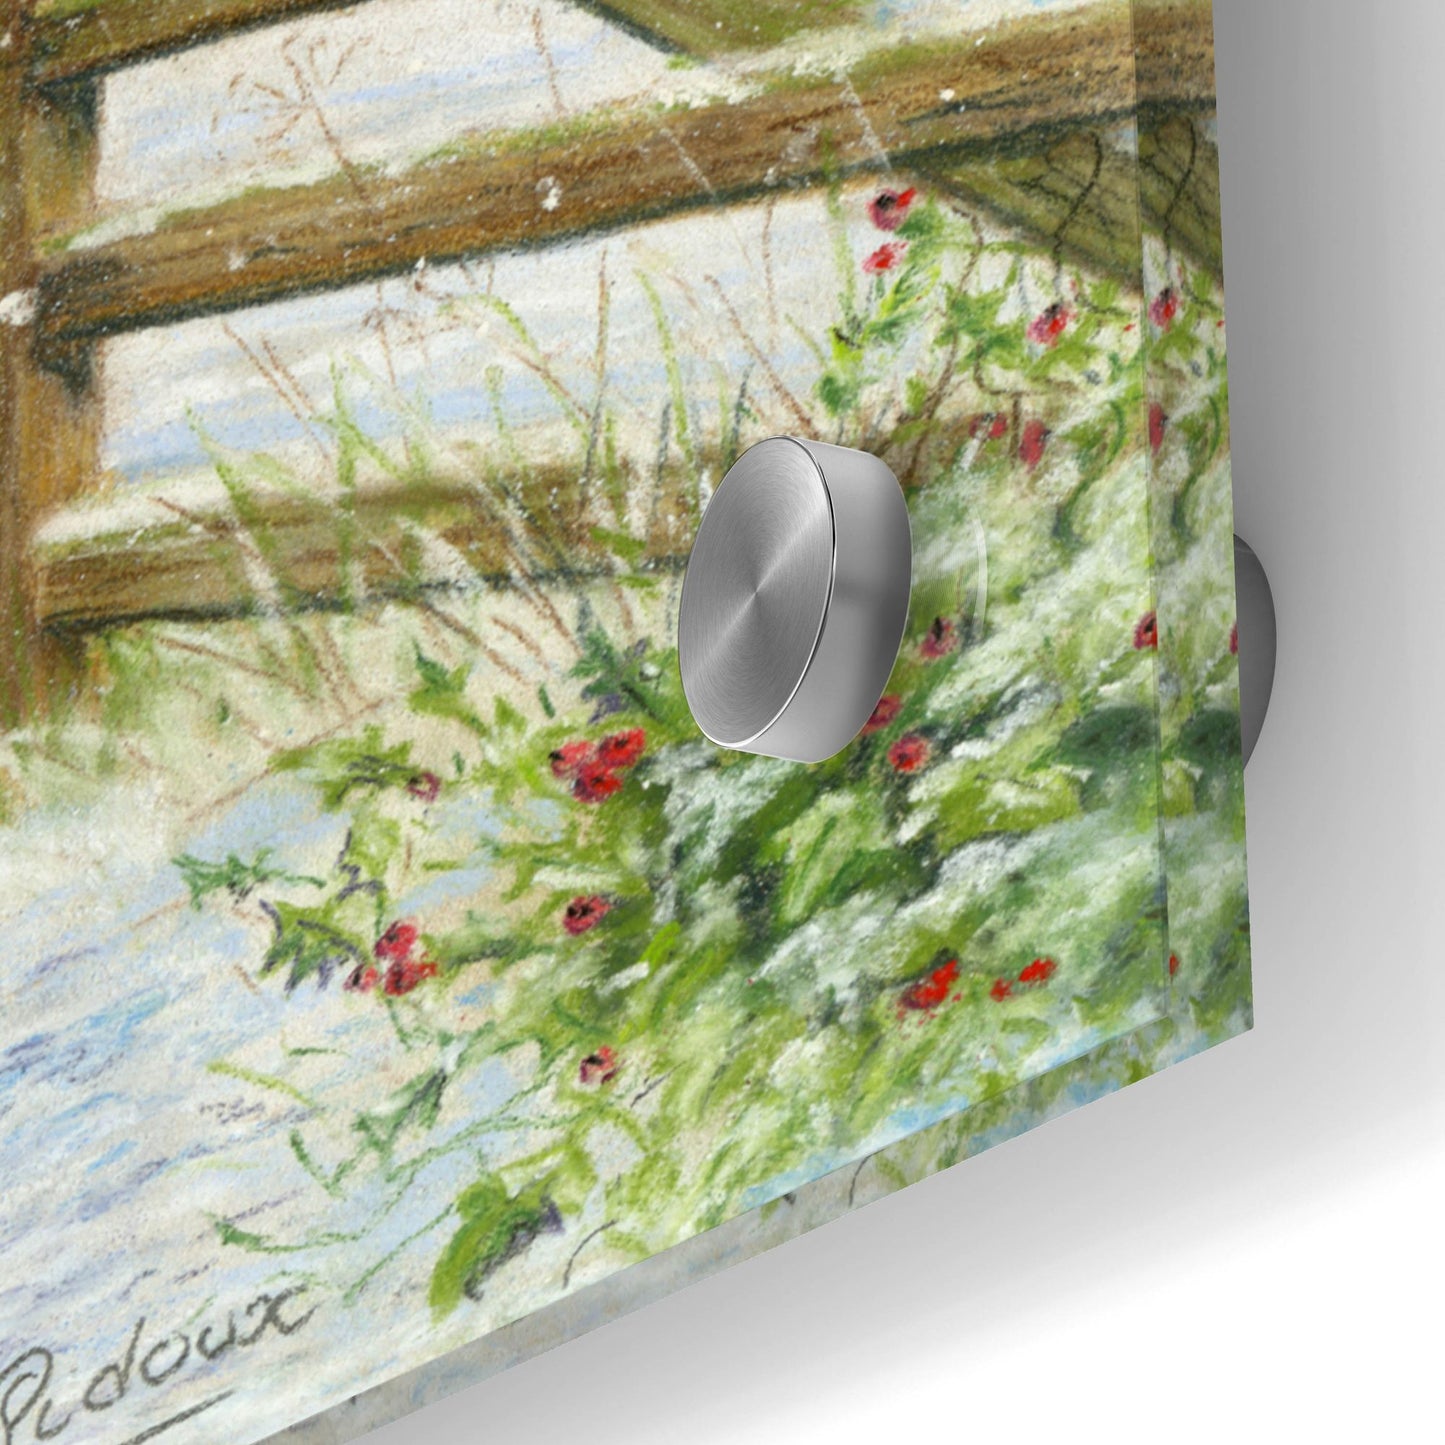 Epic Art 'Christmas Post Box' by Janet Pidoux, Acrylic Glass Wall Art,24x24